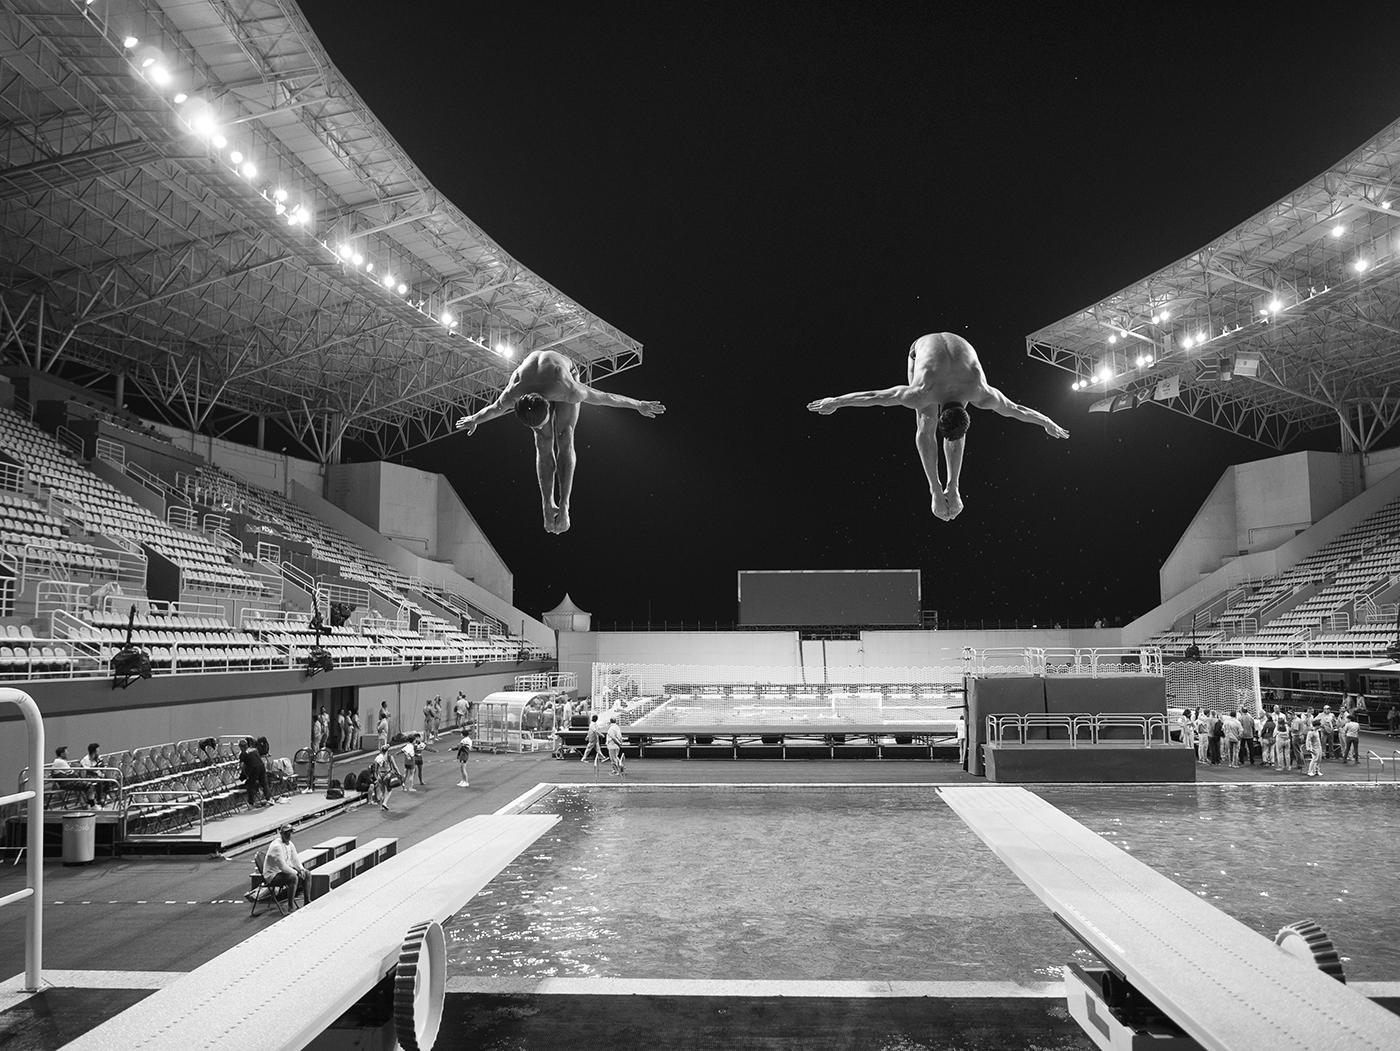 Italian diver in training : Rio Olymplcs 2016 : David Burnett | Photographer